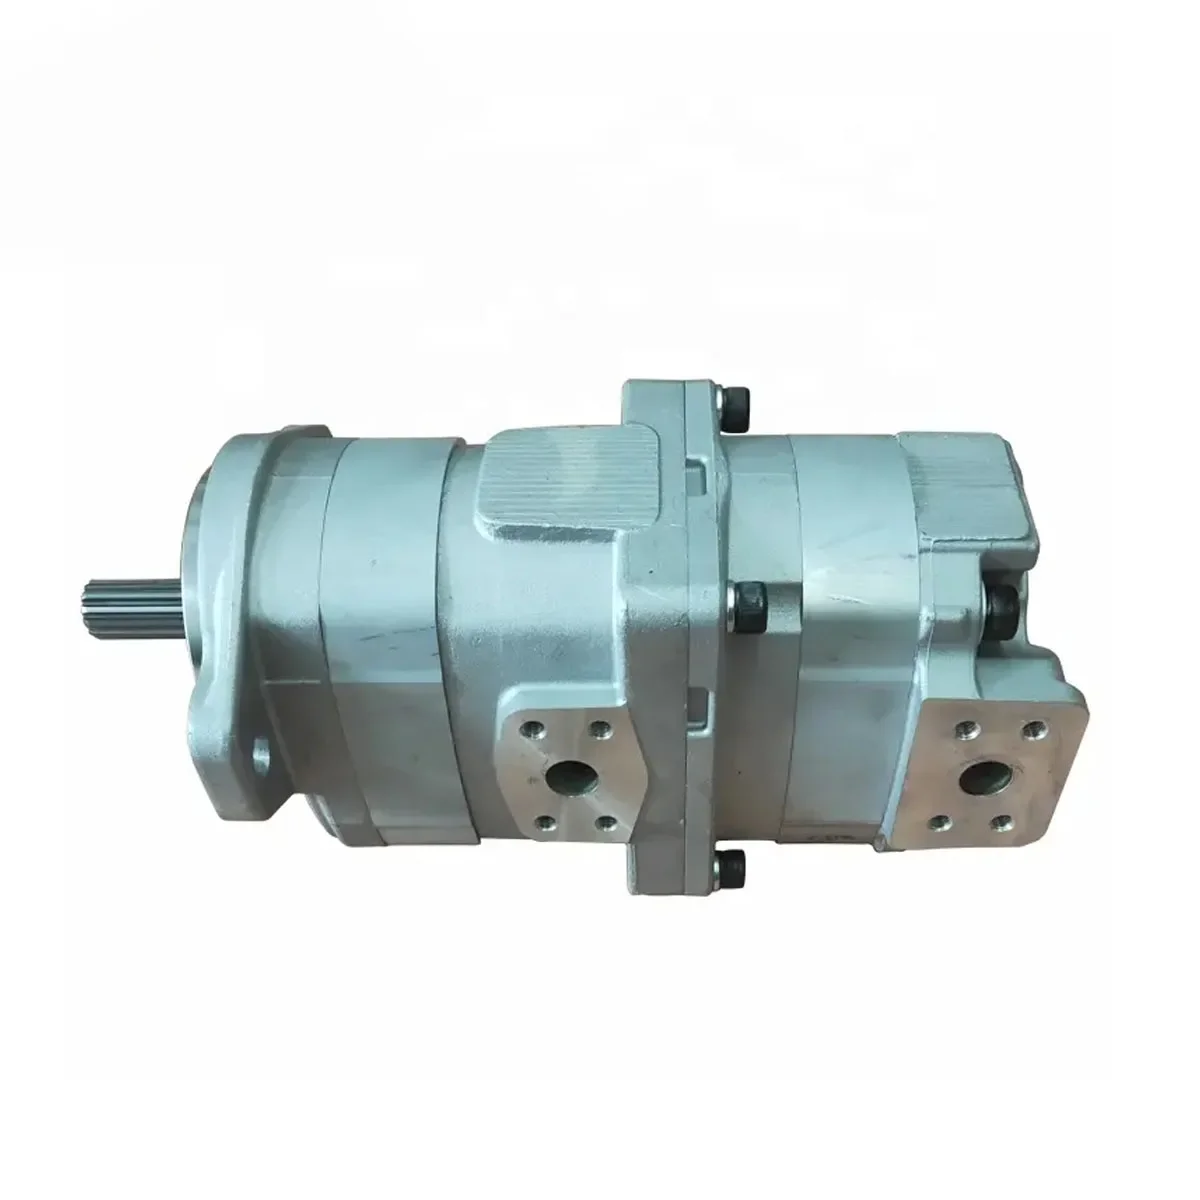 

Hydraulic Pump Gear Pump 705-52-20010 for Komatsu PC60-1 PW60-1 Excavator